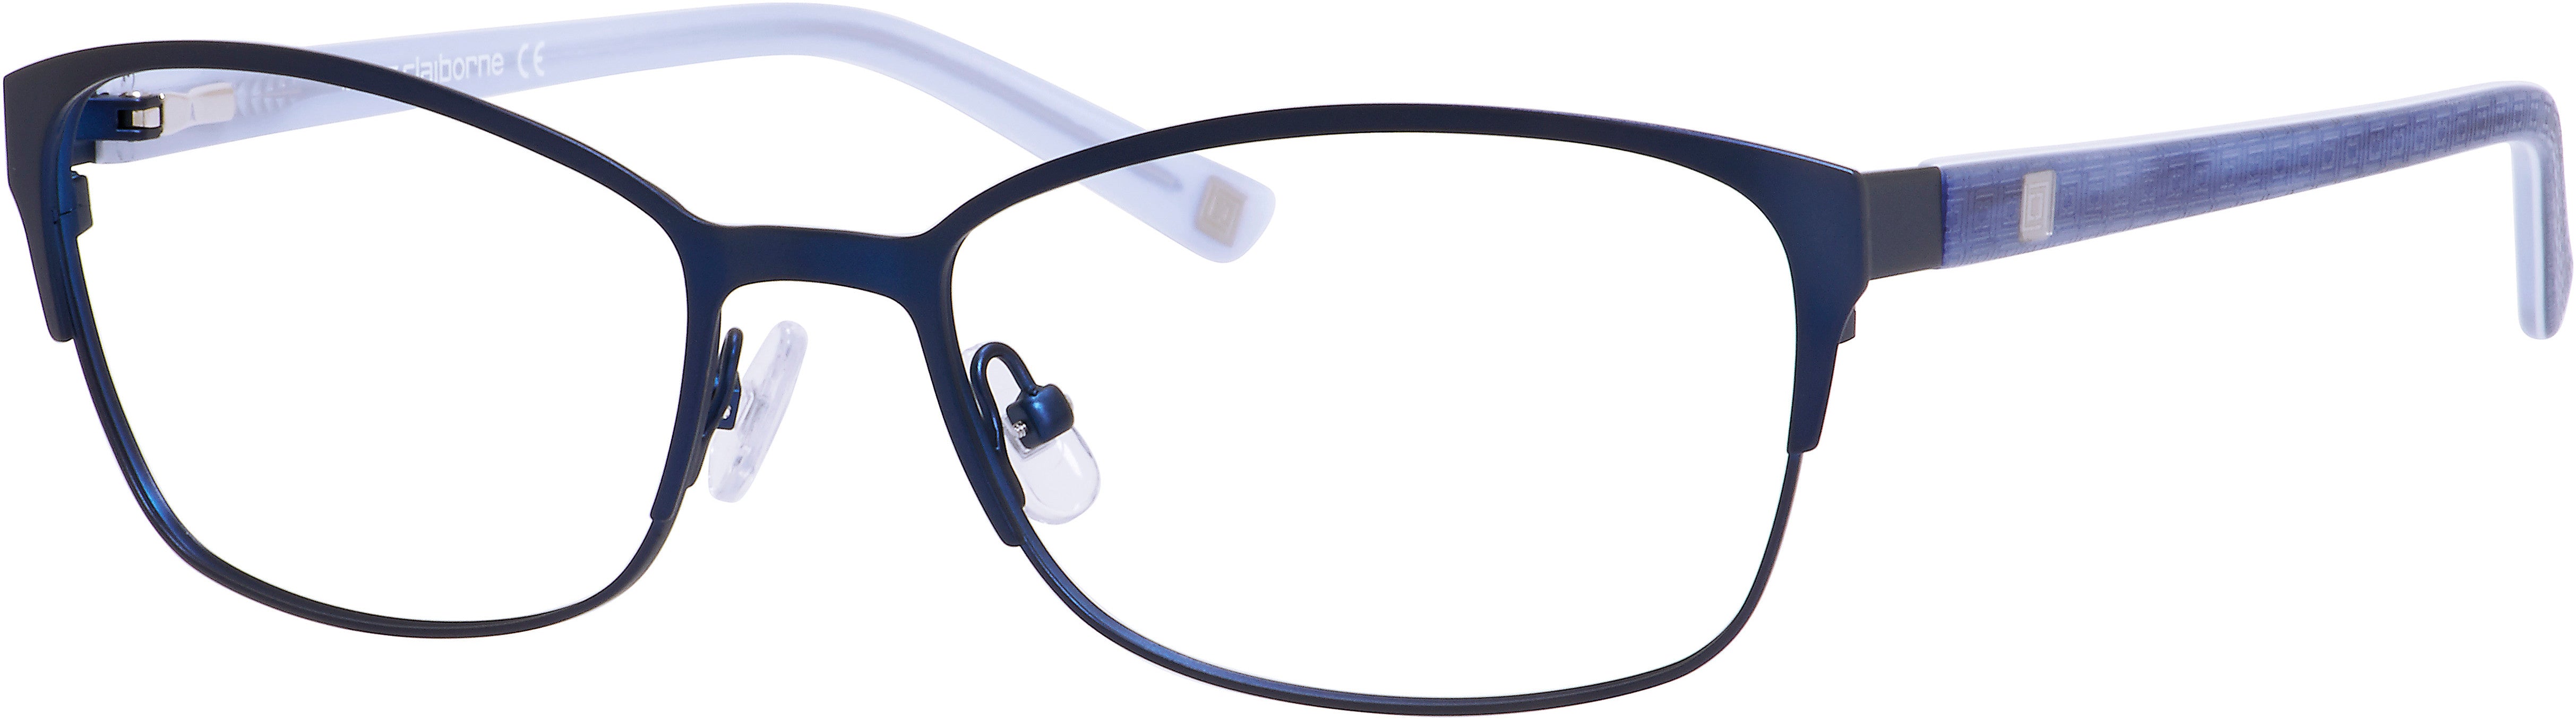  Liz Claiborne 605 Rectangular Eyeglasses 0DA4-0DA4  Satin Navy (00 Demo Lens)